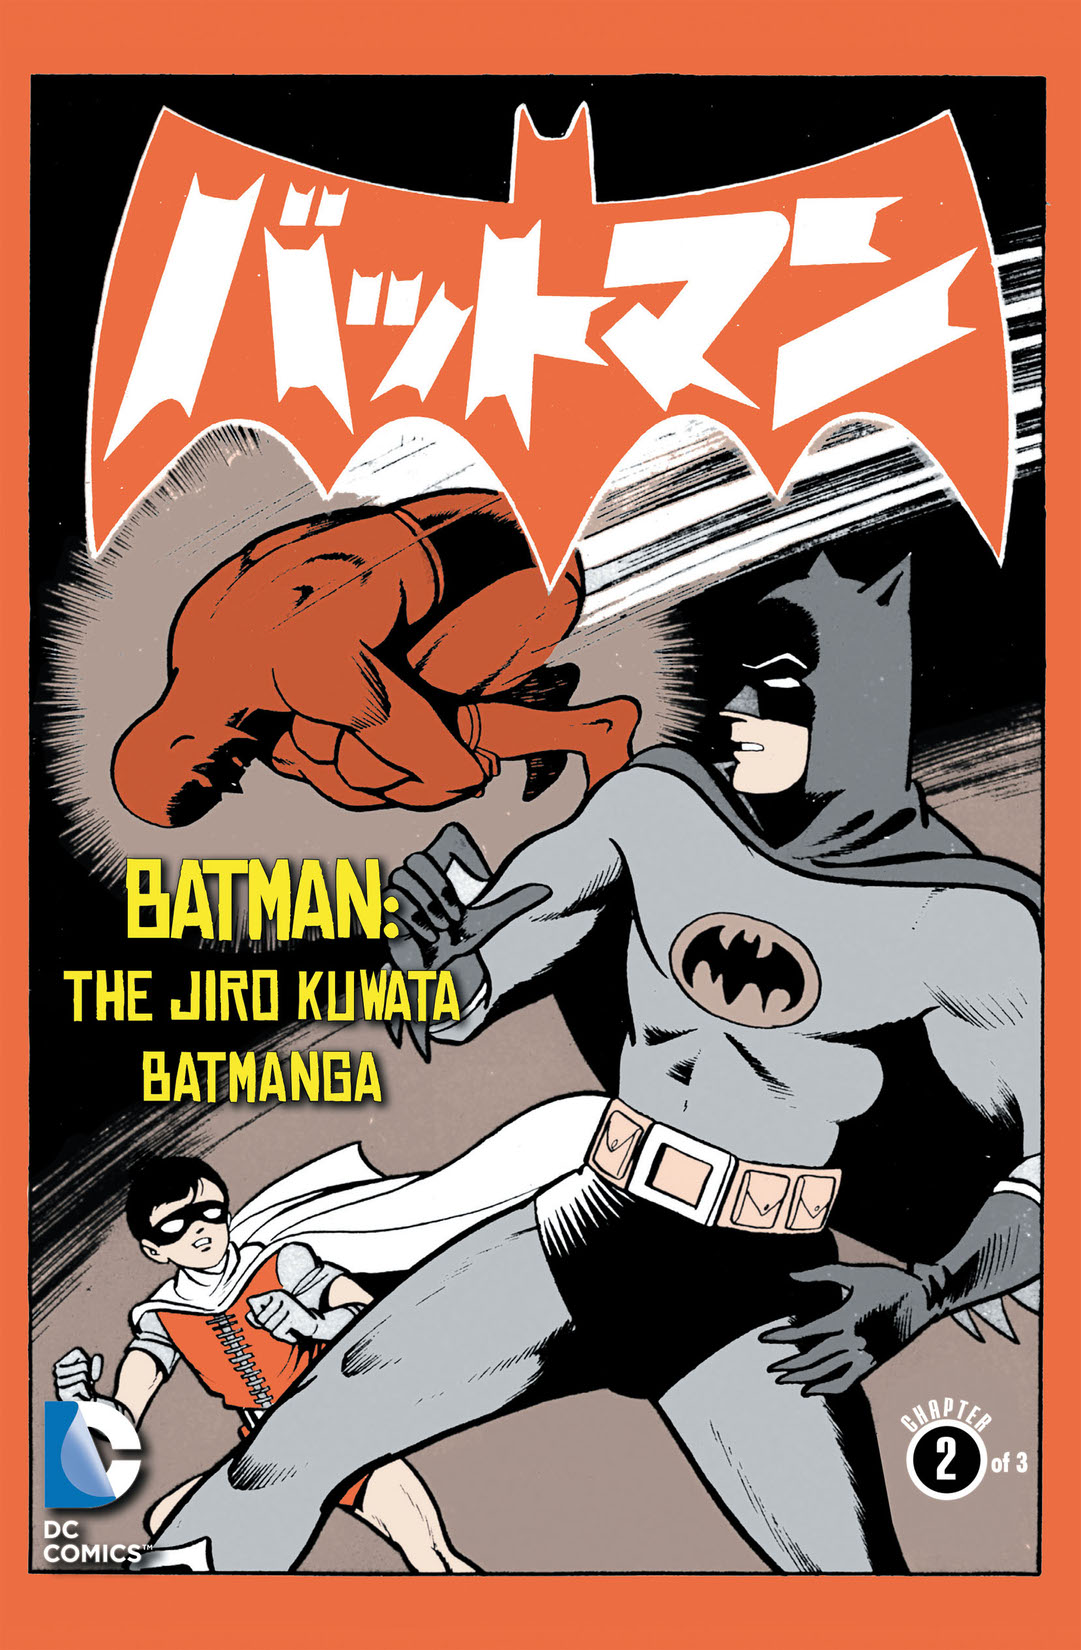 Batman: The Jiro Kuwata Batmanga #8 preview images